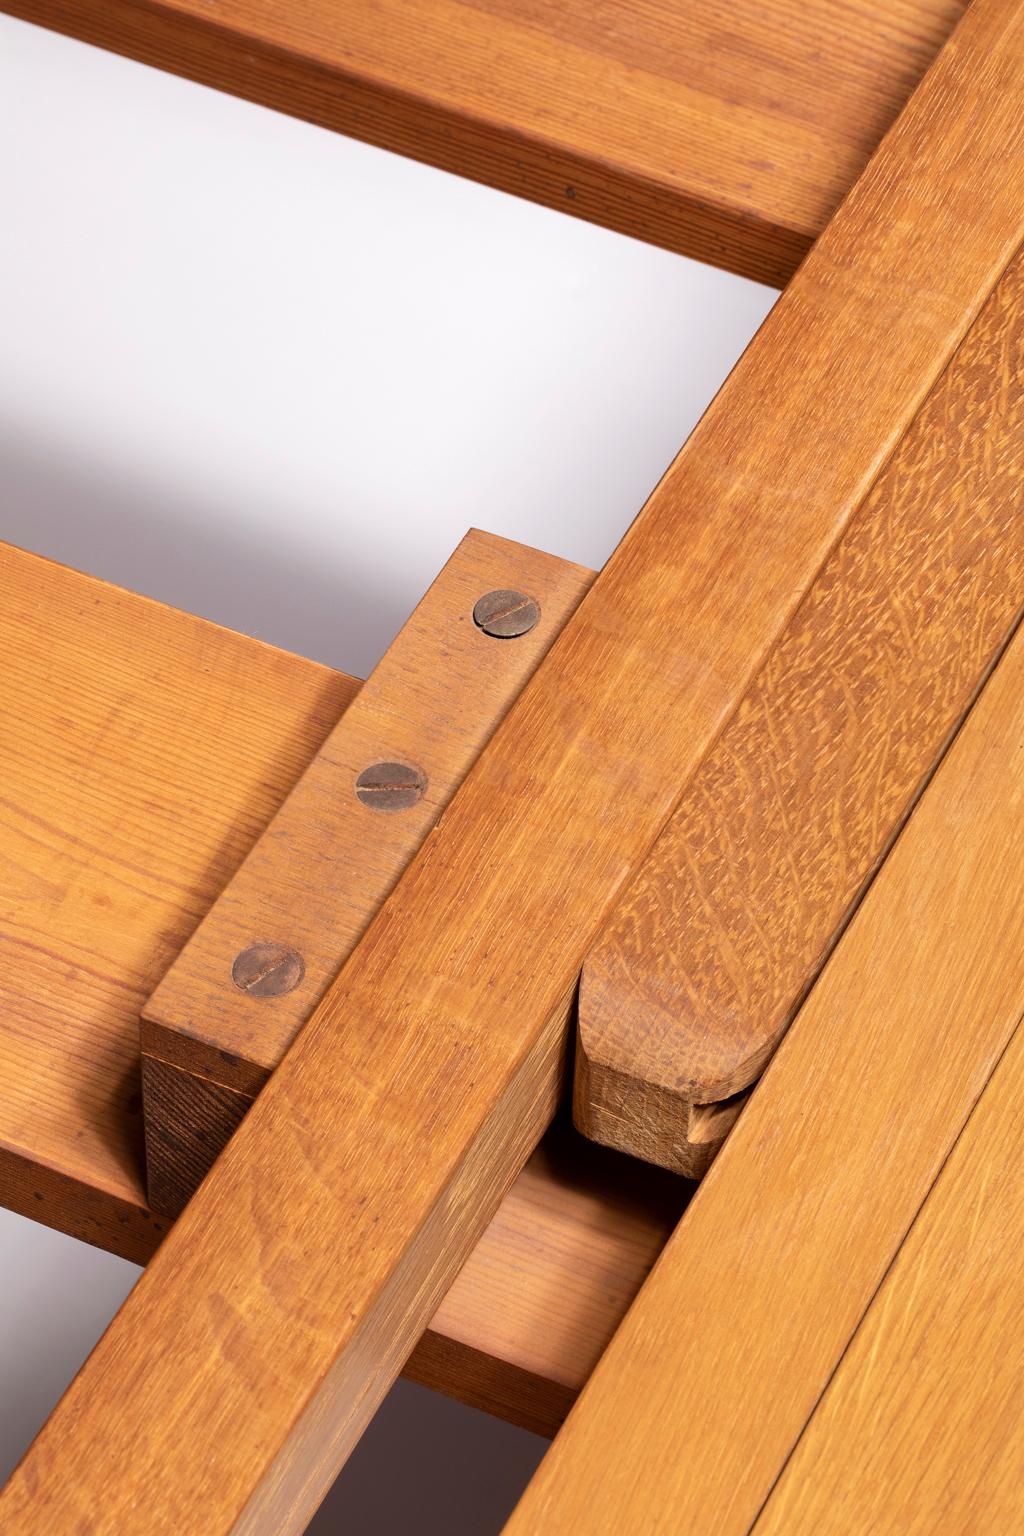 Henrik Worts Erik Worts Danish Mid-Century Modern Mahogany Table & Chairs For Sale 9